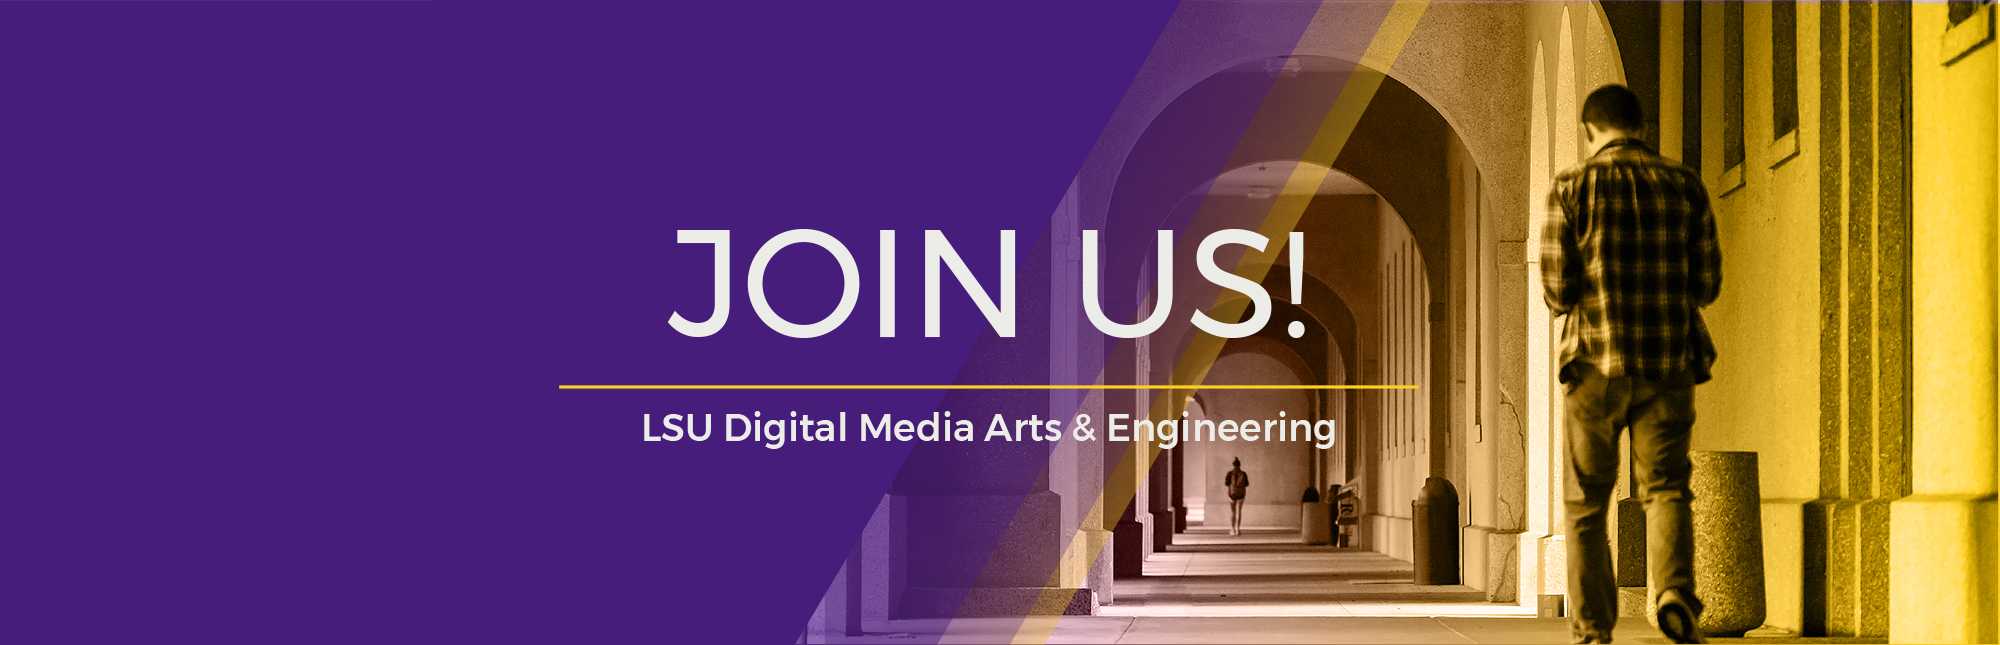 Join us for Digital Media Arts & Engineering